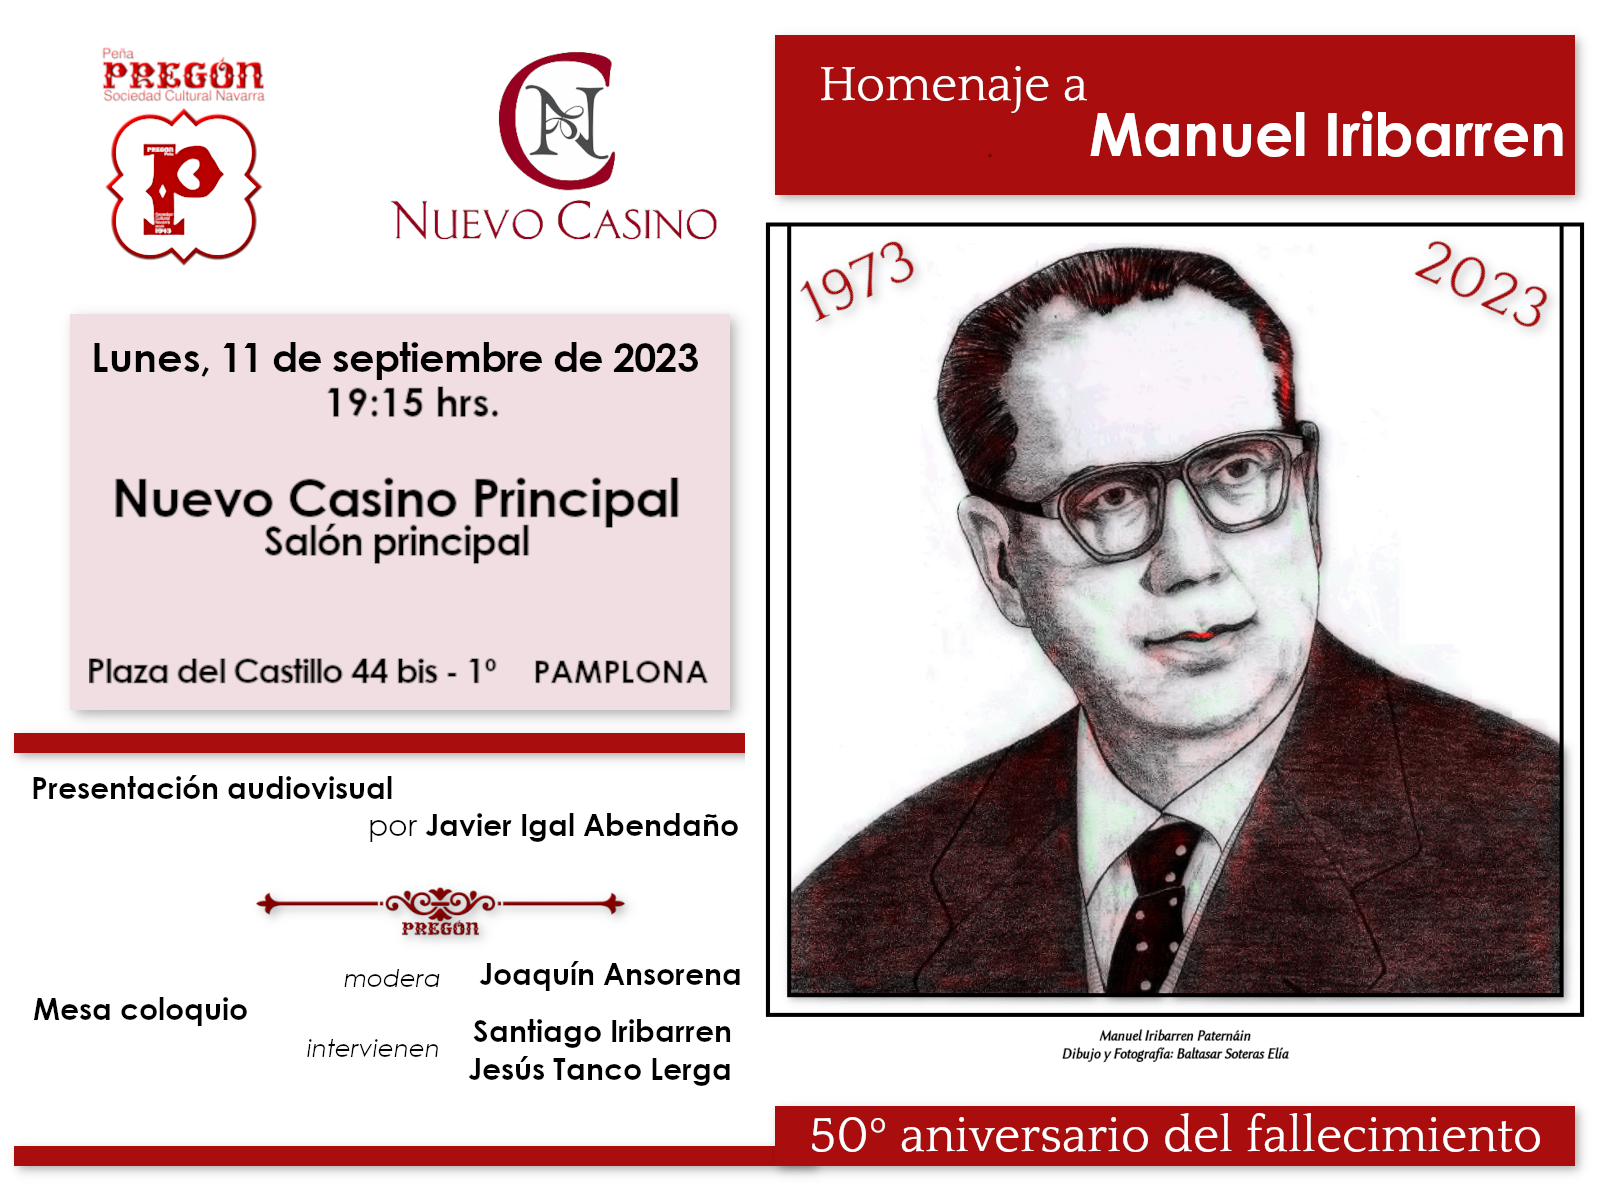 Homenaje a Manuel Iribarren